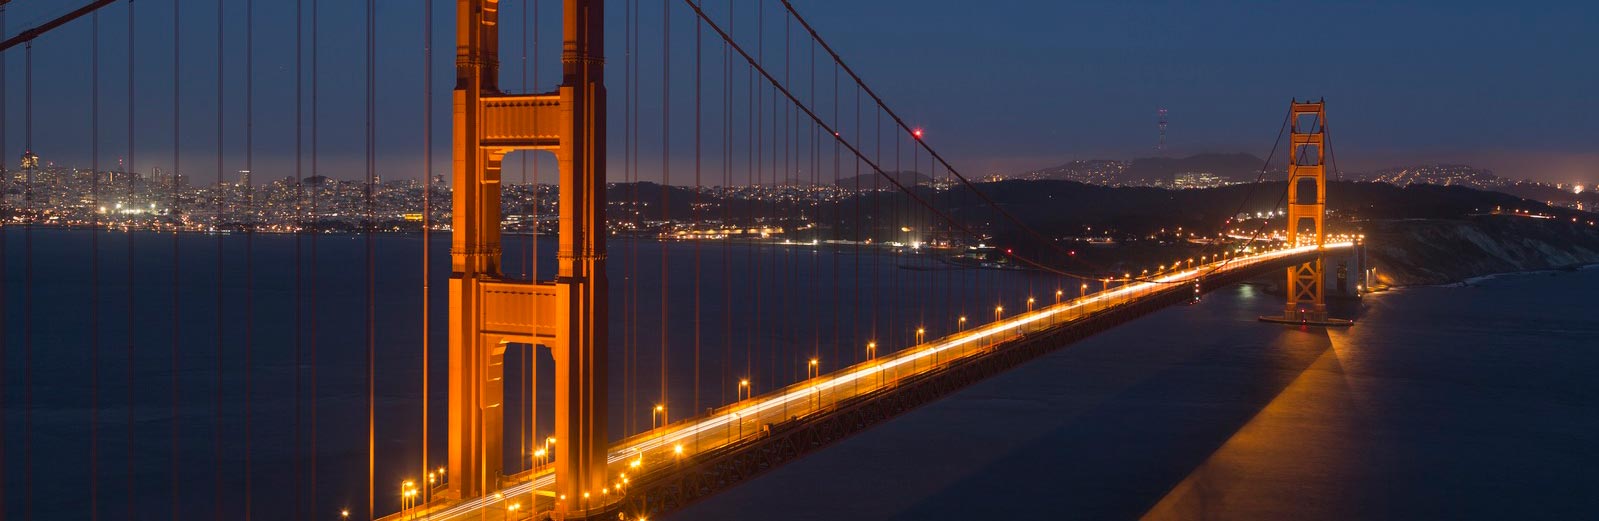 A panorama of the Golden Gate Bridge